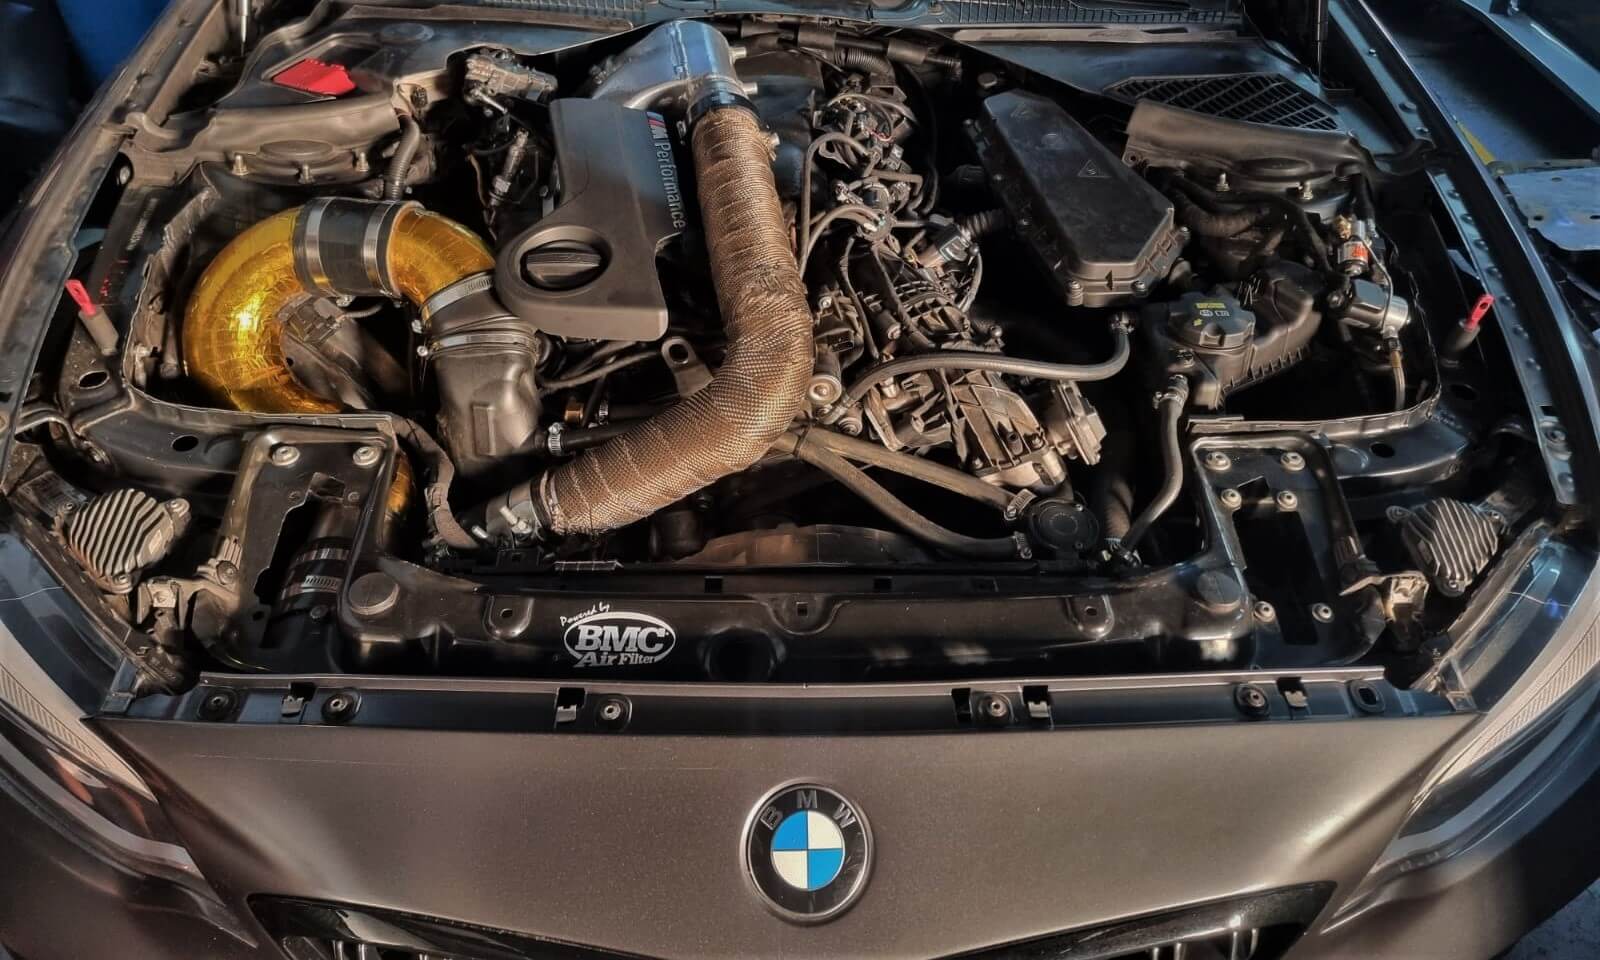 BMW M2 50d xDrive engine